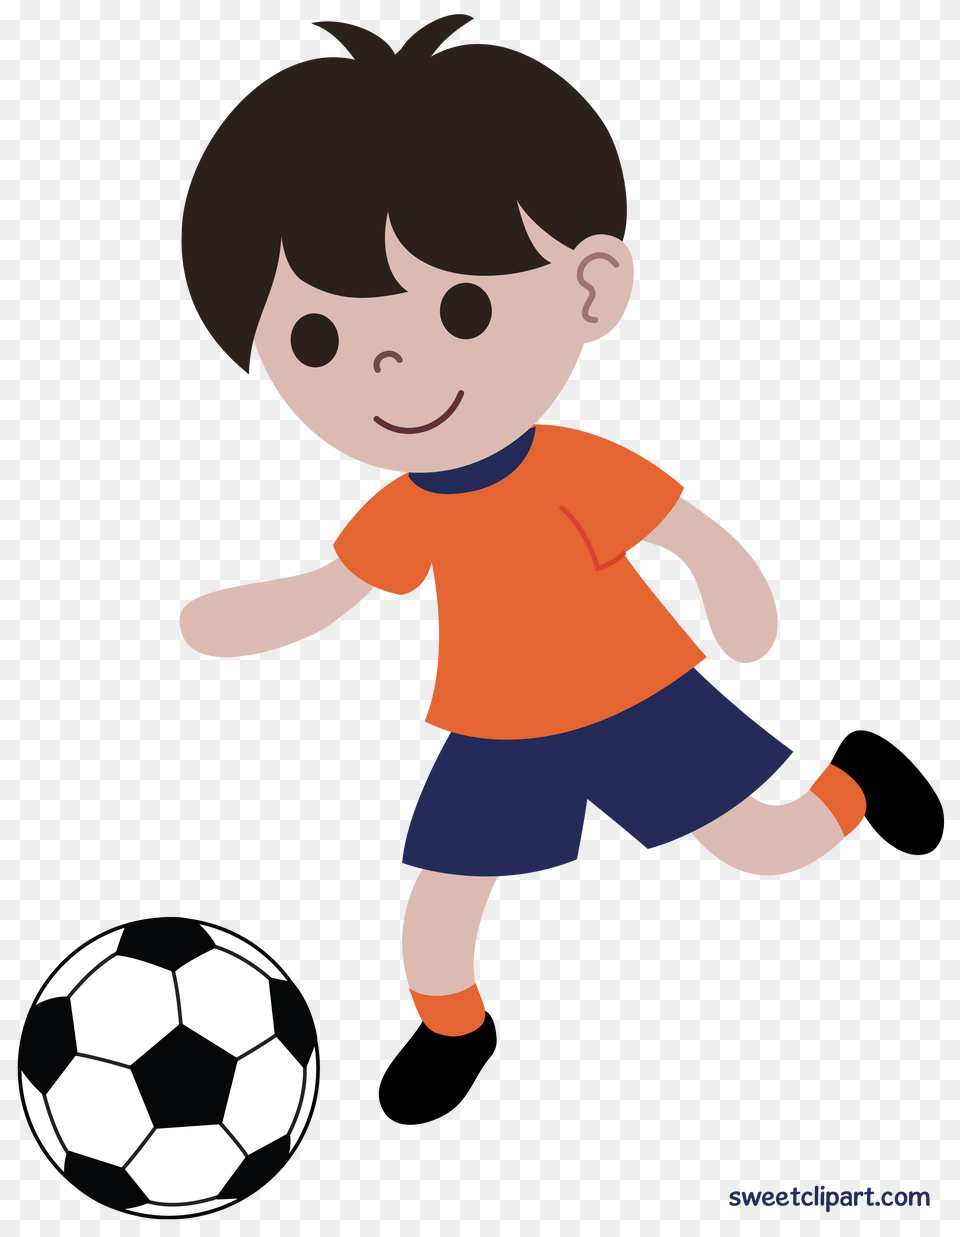 Category Clip Art, Ball, Football, Soccer, Soccer Ball Png Image